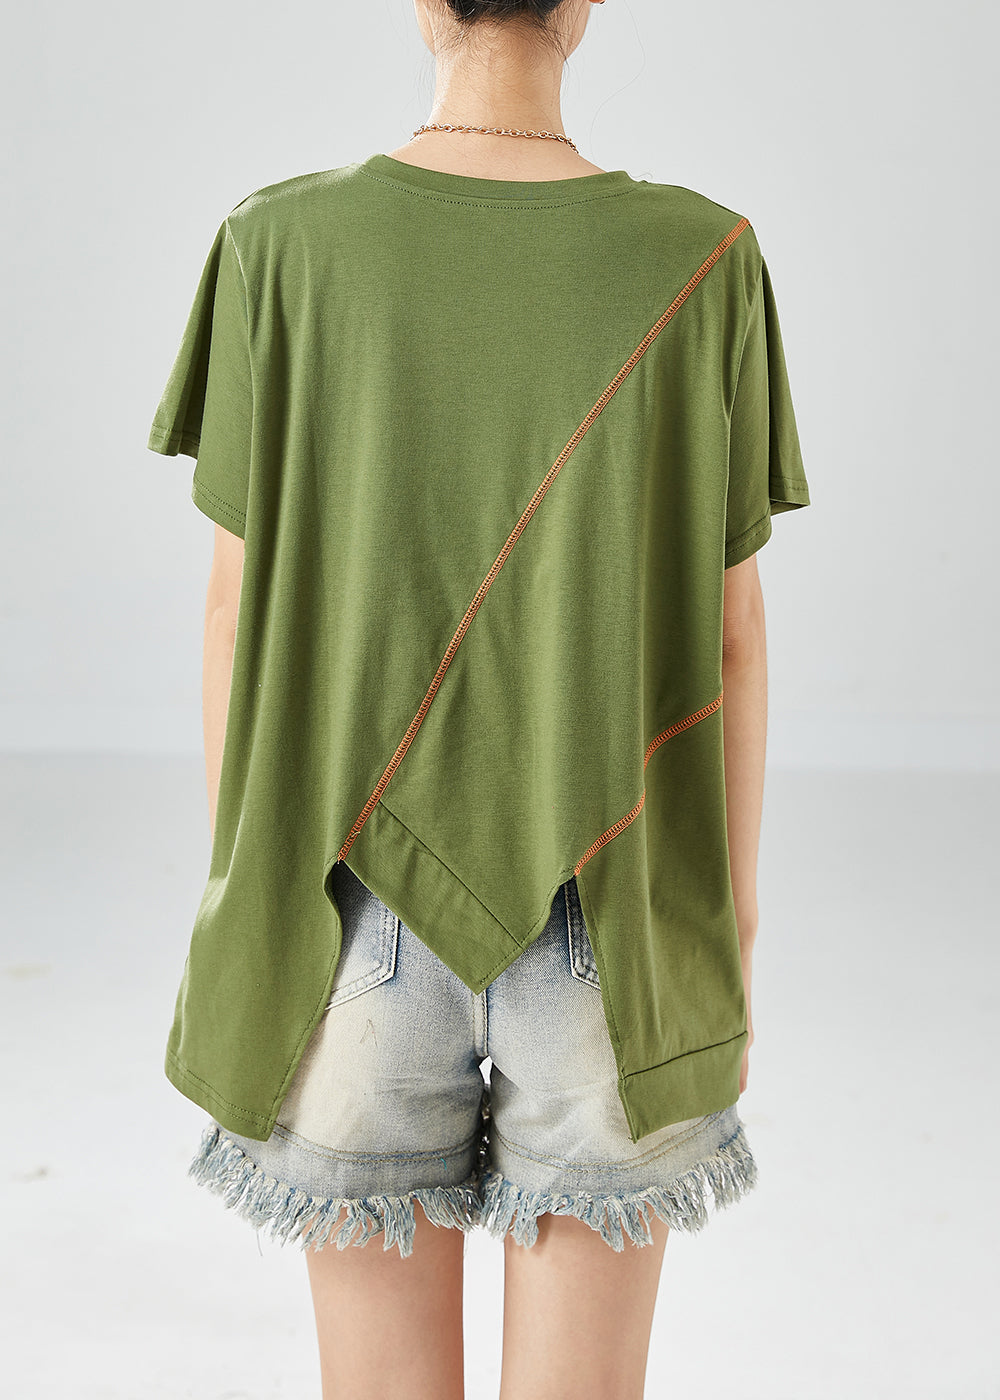 Natural Green Asymmetrical Design Print Cotton Tank Tops Summer LY6136 - fabuloryshop